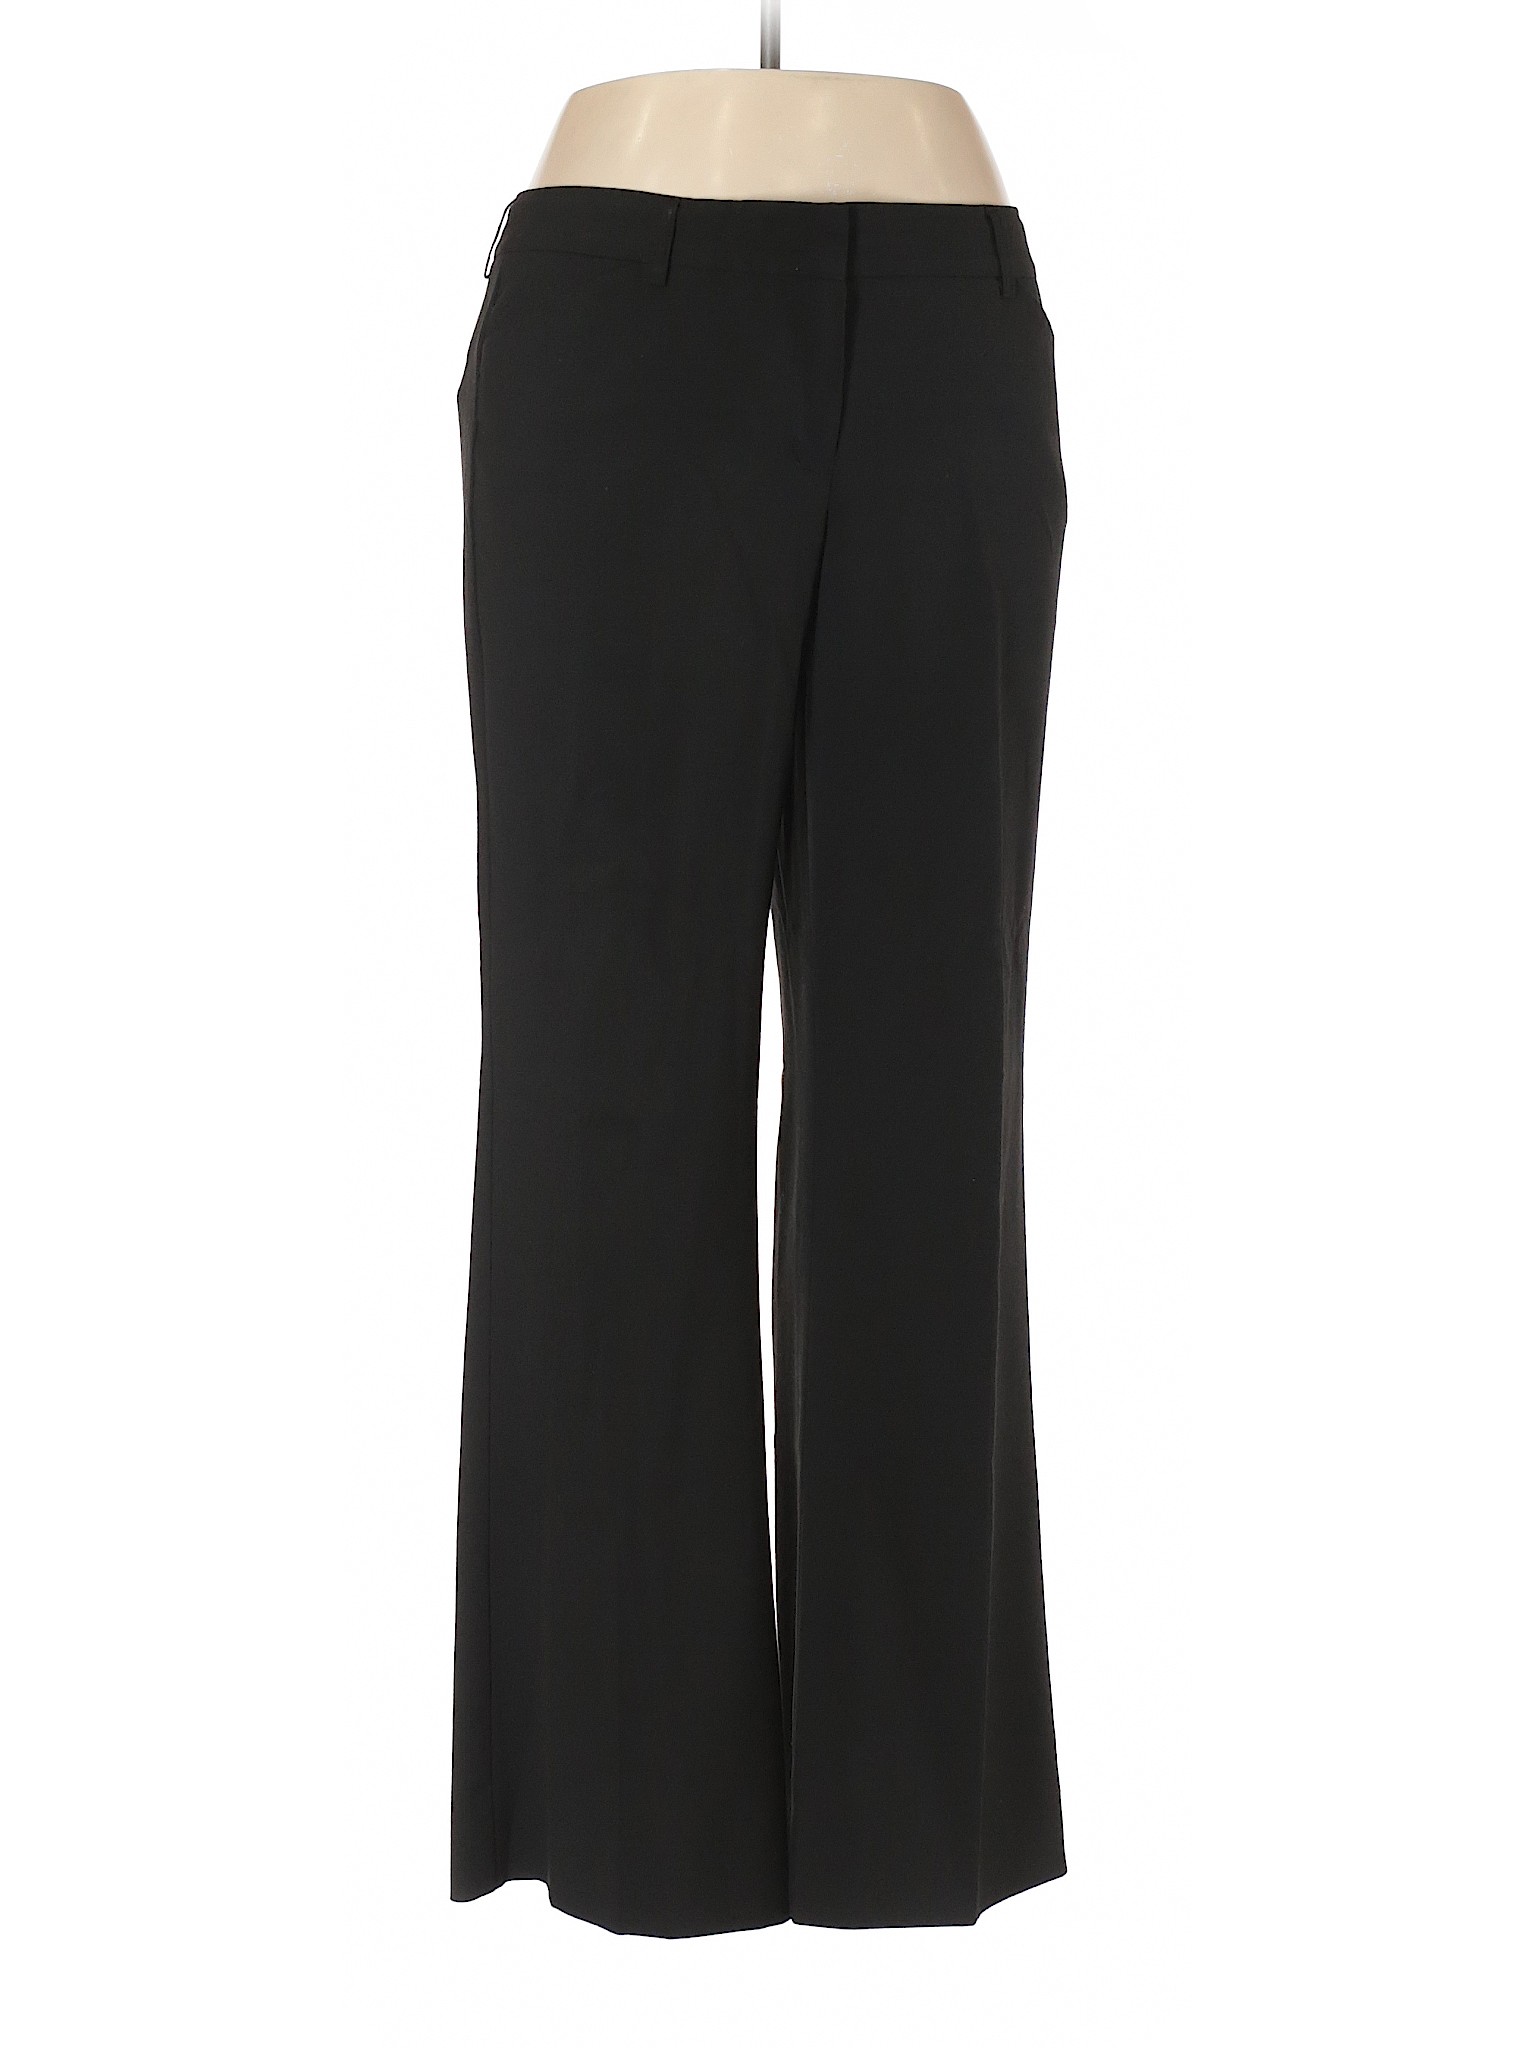 Express Women Black Dress Pants 10 | eBay